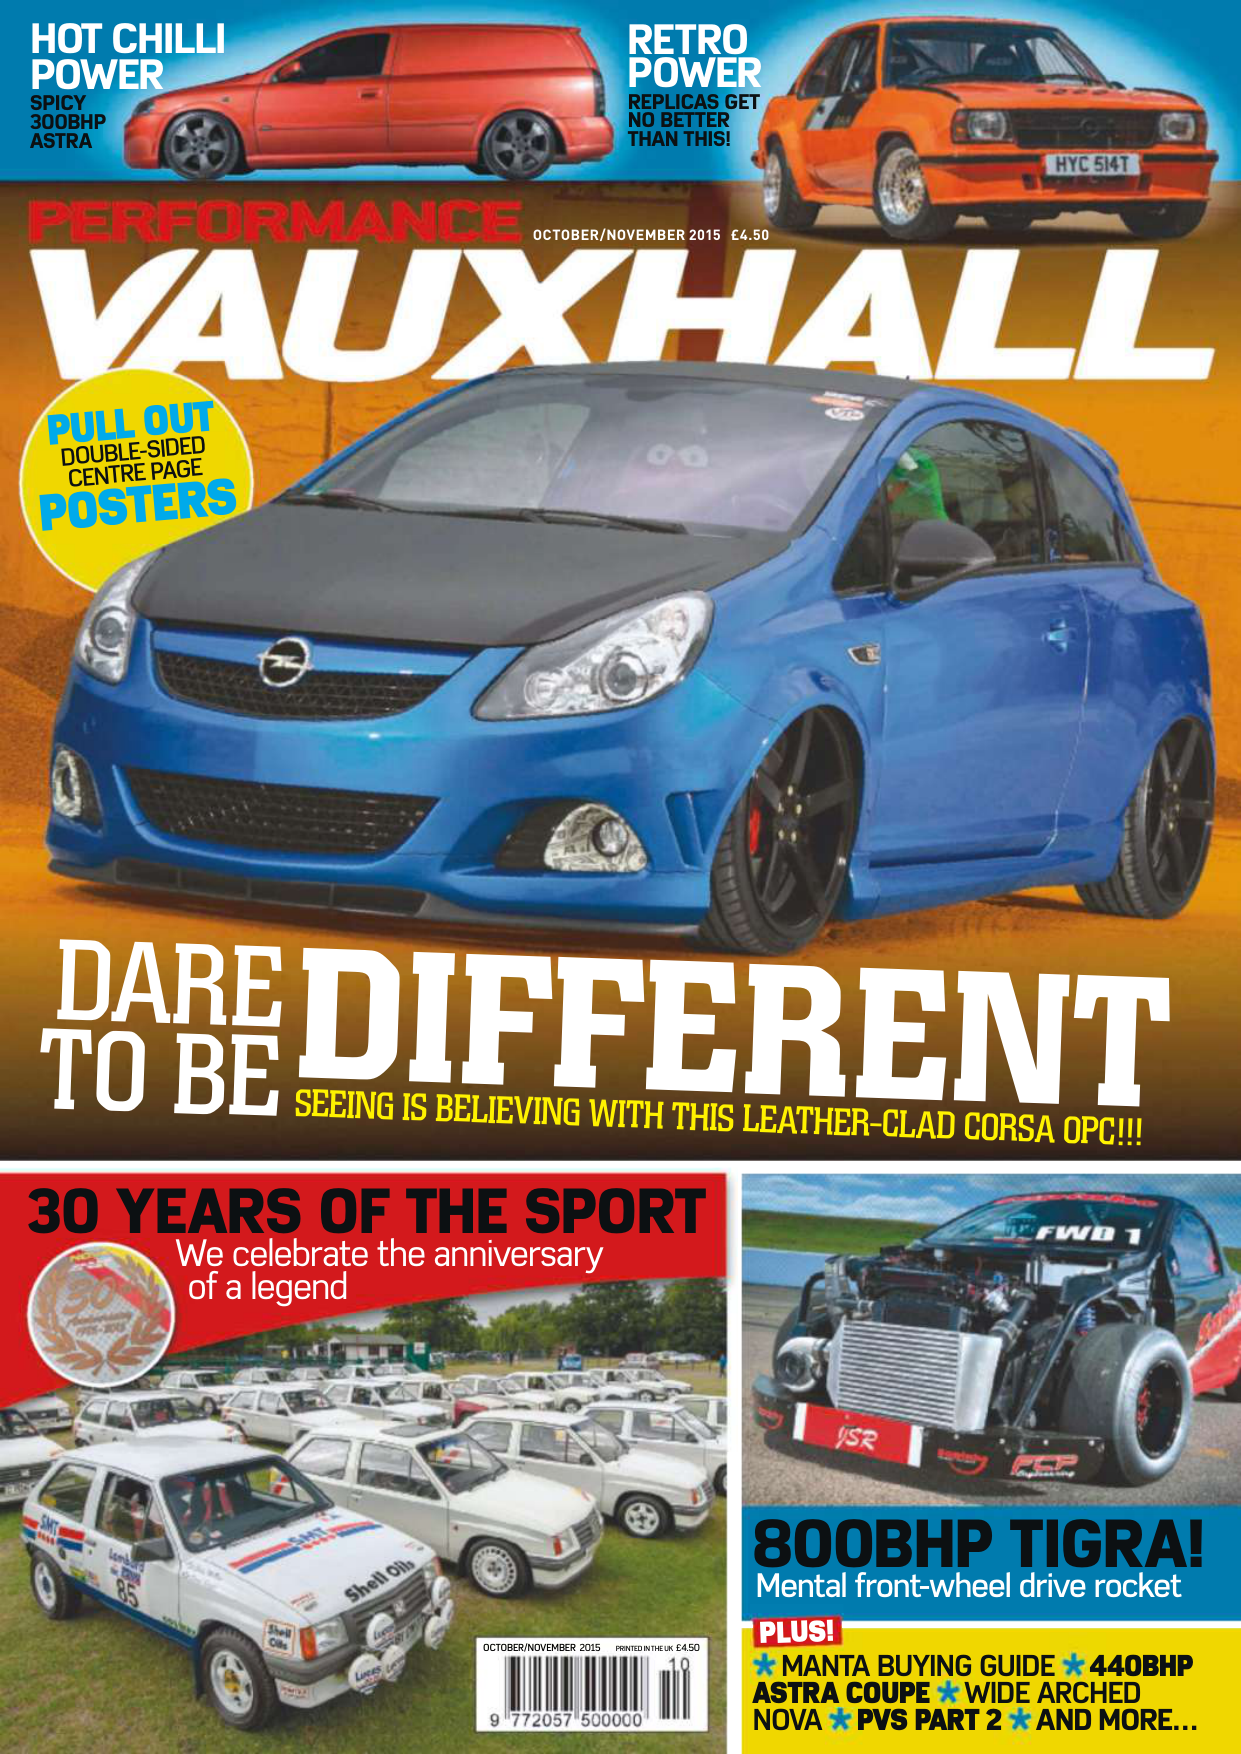 Vauxhall GTE Hybrid bonnet vents Gloss Black finish astra corsa vectra inc VXR 